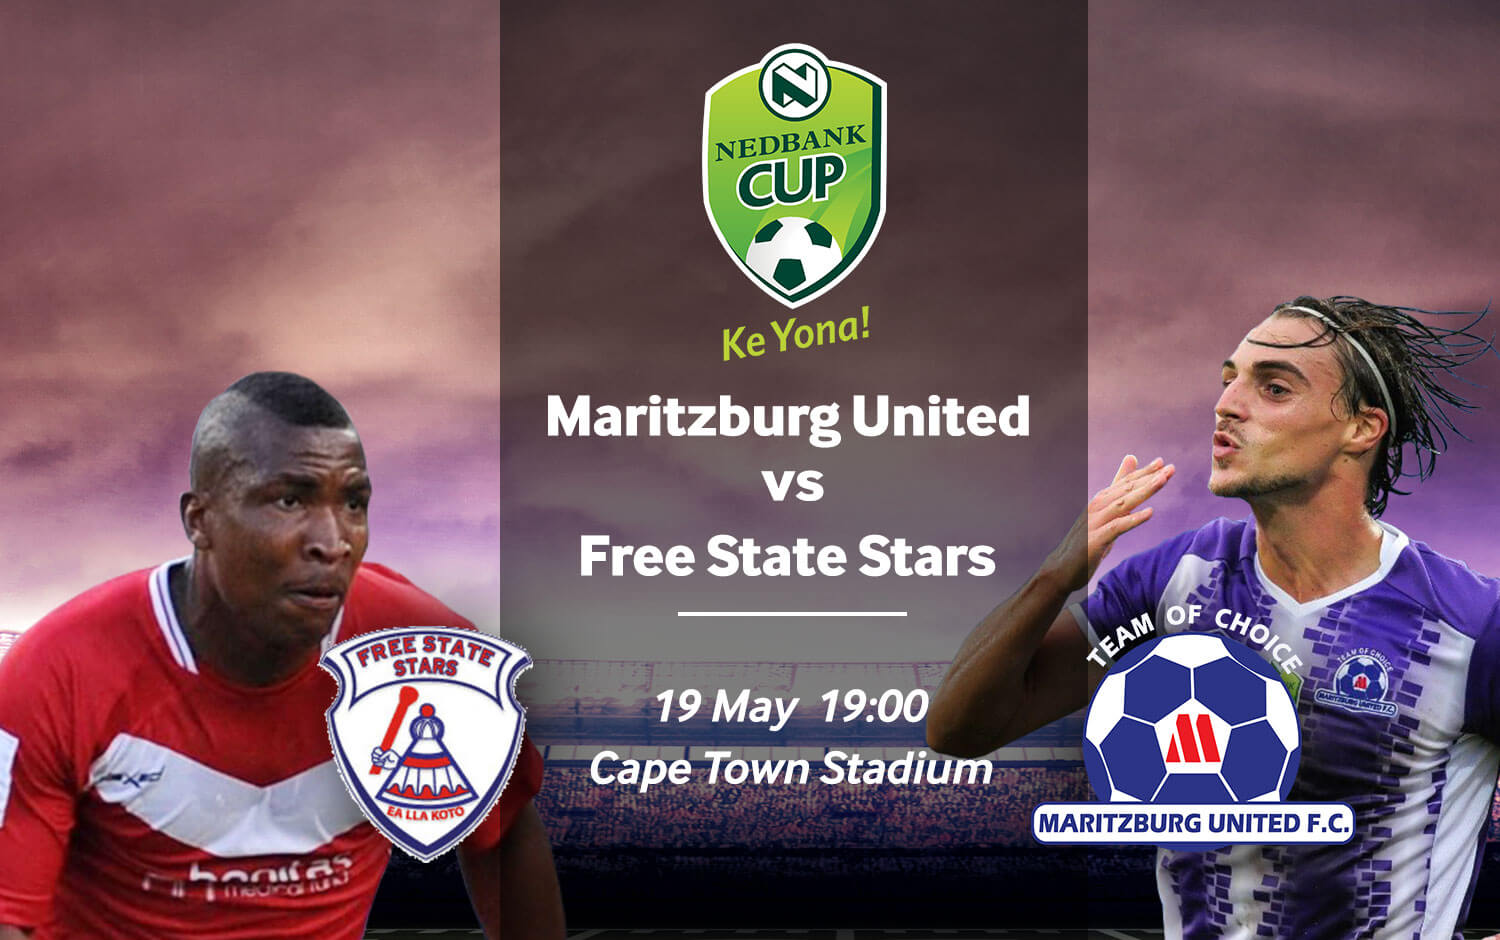 Nedbank Cup final Maritzburg united vs Free state stars